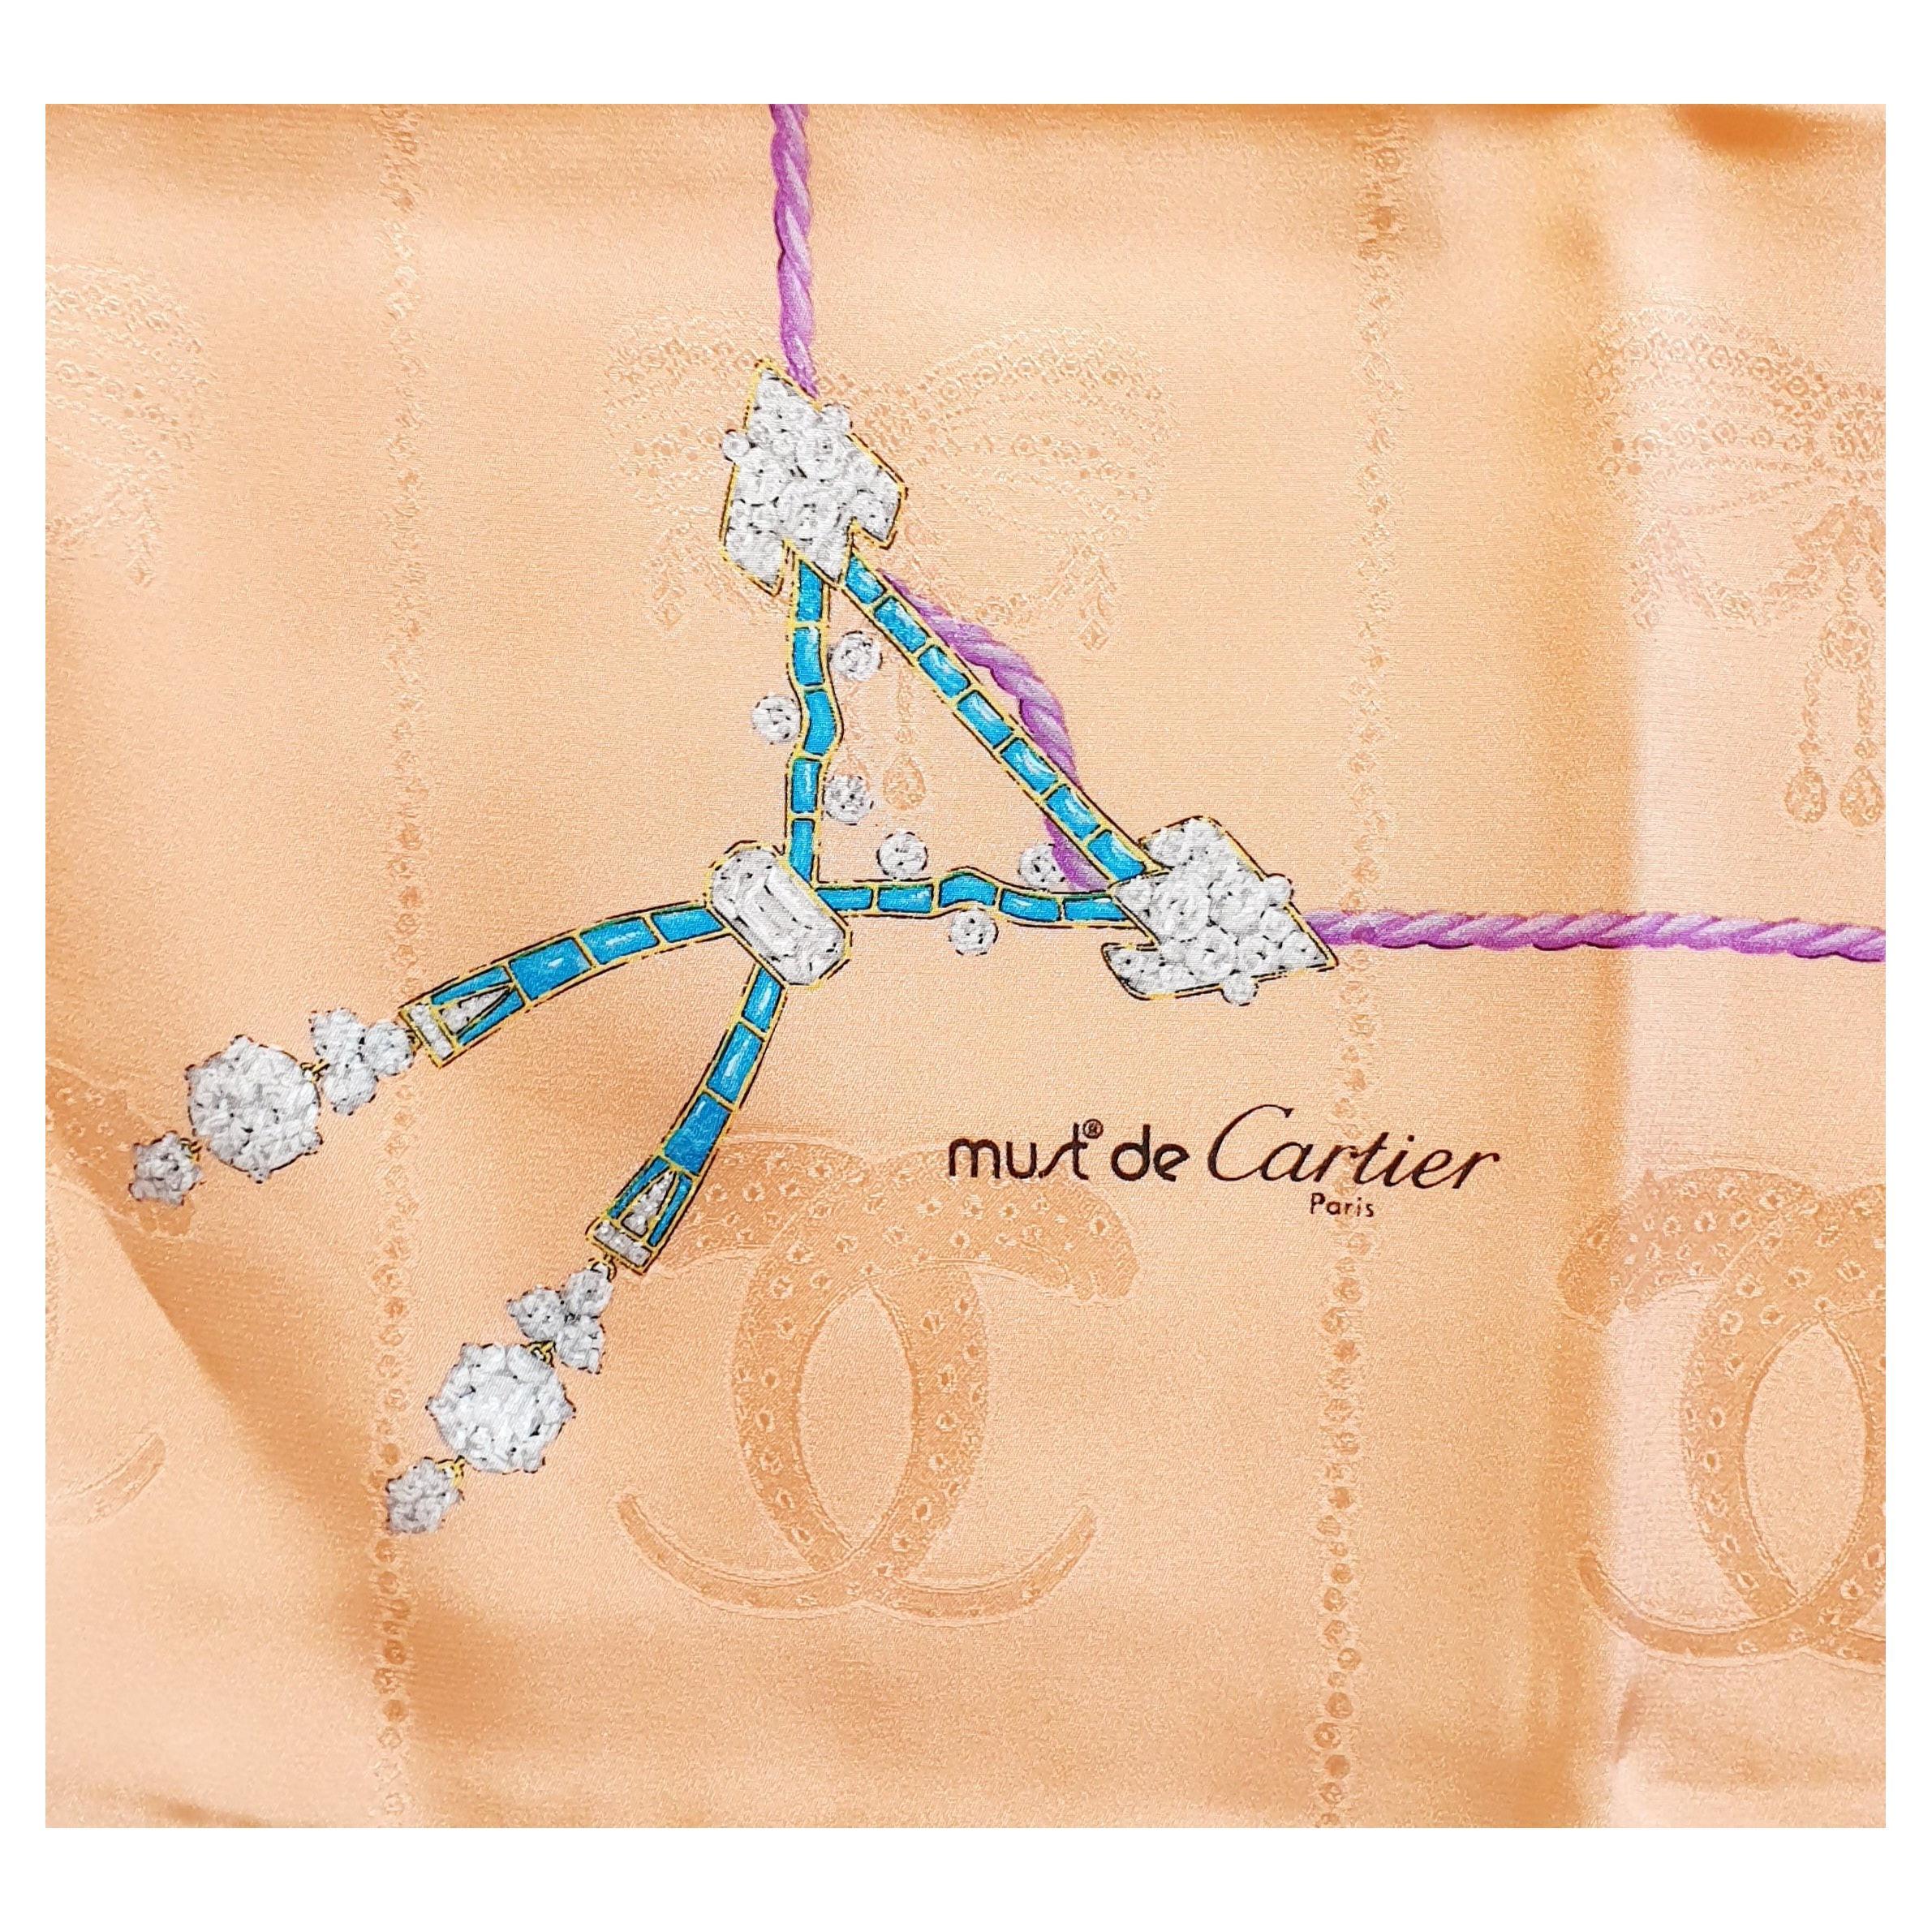 New Le must de Cartier silk salmon scarf with precious jewels designed 